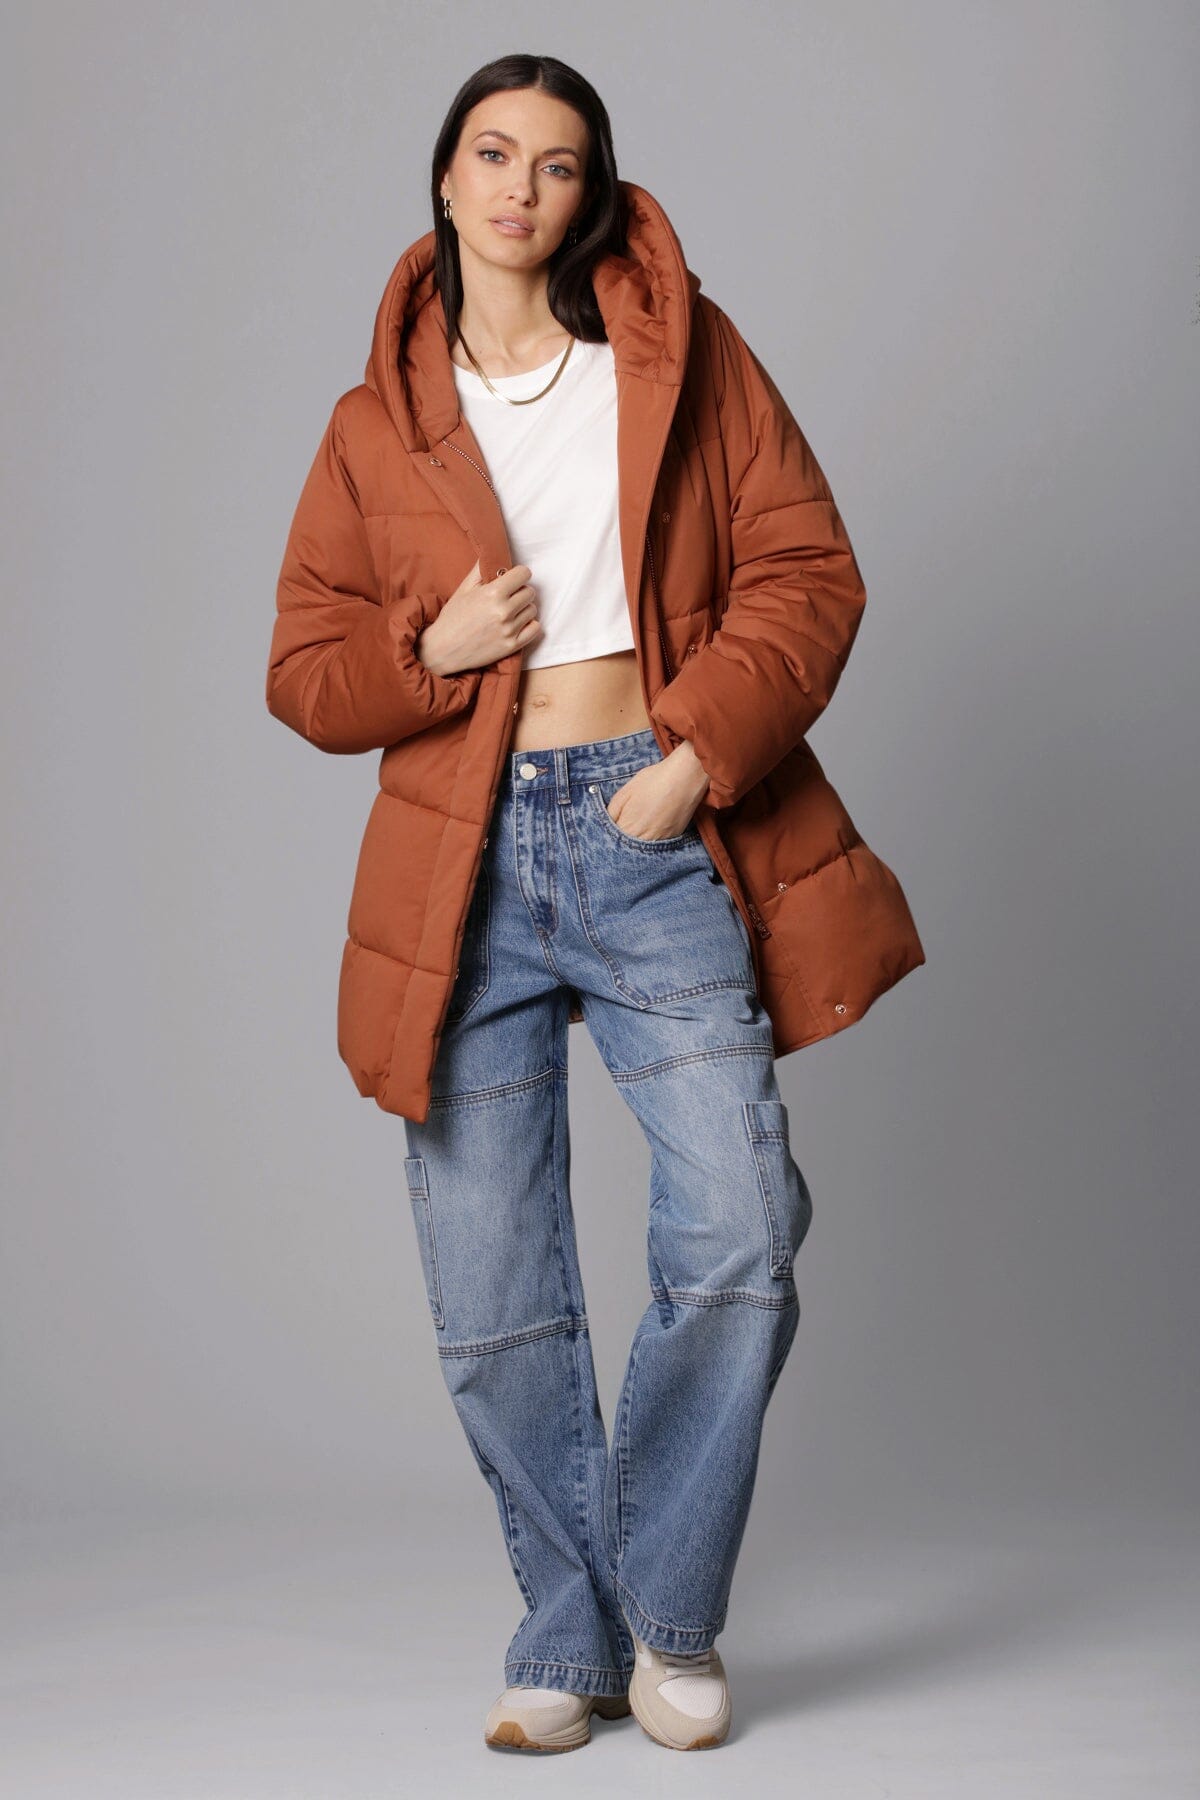 star quilted thermal puff wrap puffer coat jacket cedar brown - women's figure flattering designer fashion streetwear coats jackets outerwear